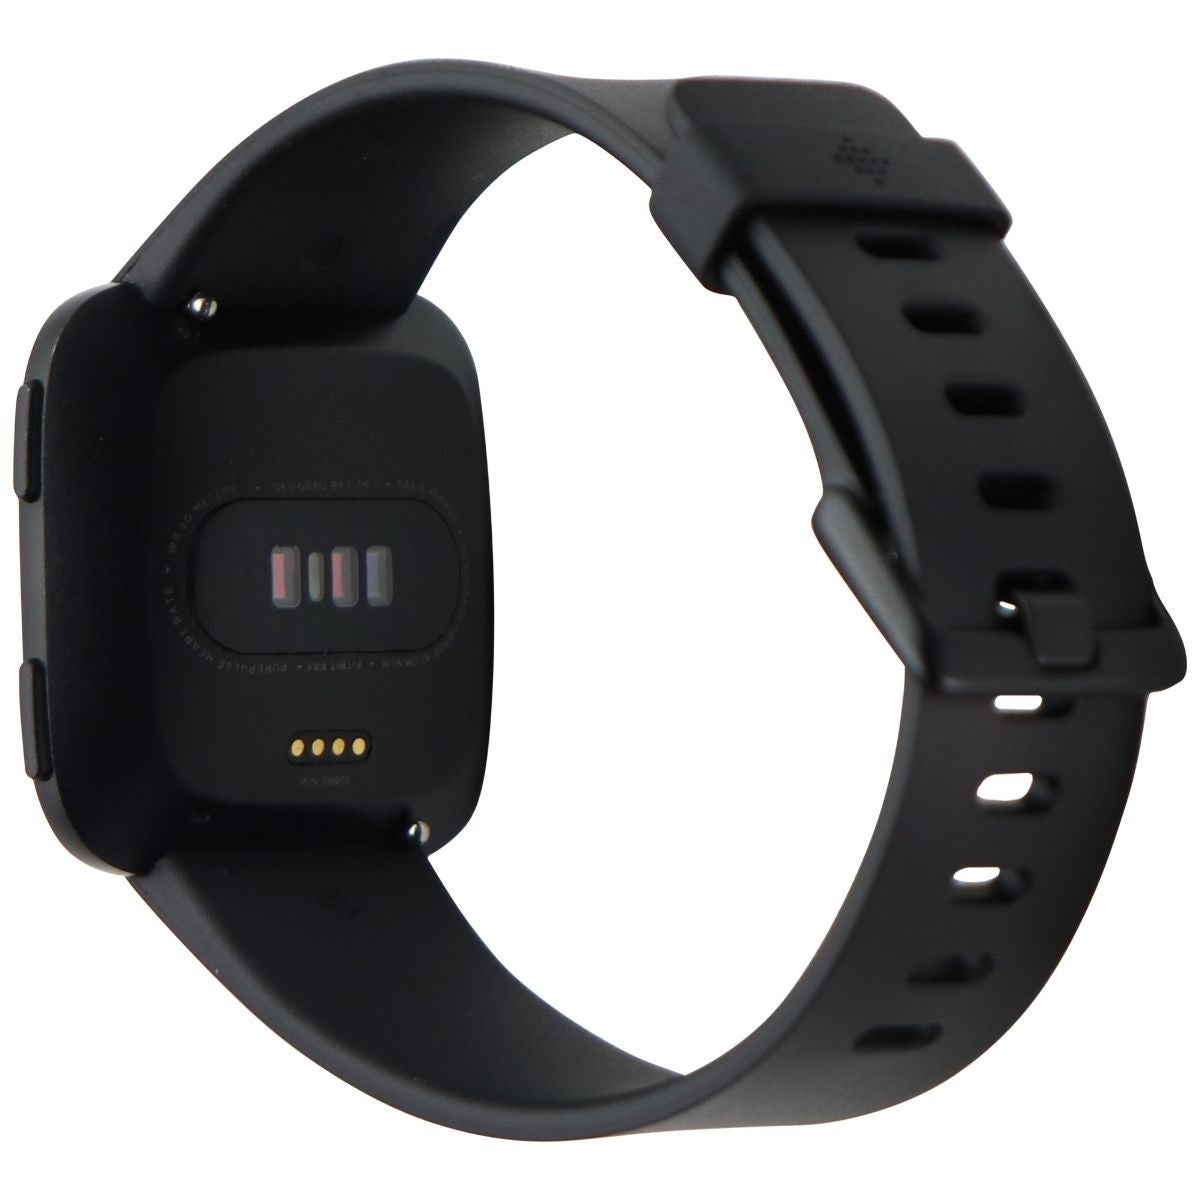 Fitbit Versa (1st Gen) Smart Watch - Black Aluminum/Black Band (FB505) Smart Watches Fitbit    - Simple Cell Bulk Wholesale Pricing - USA Seller